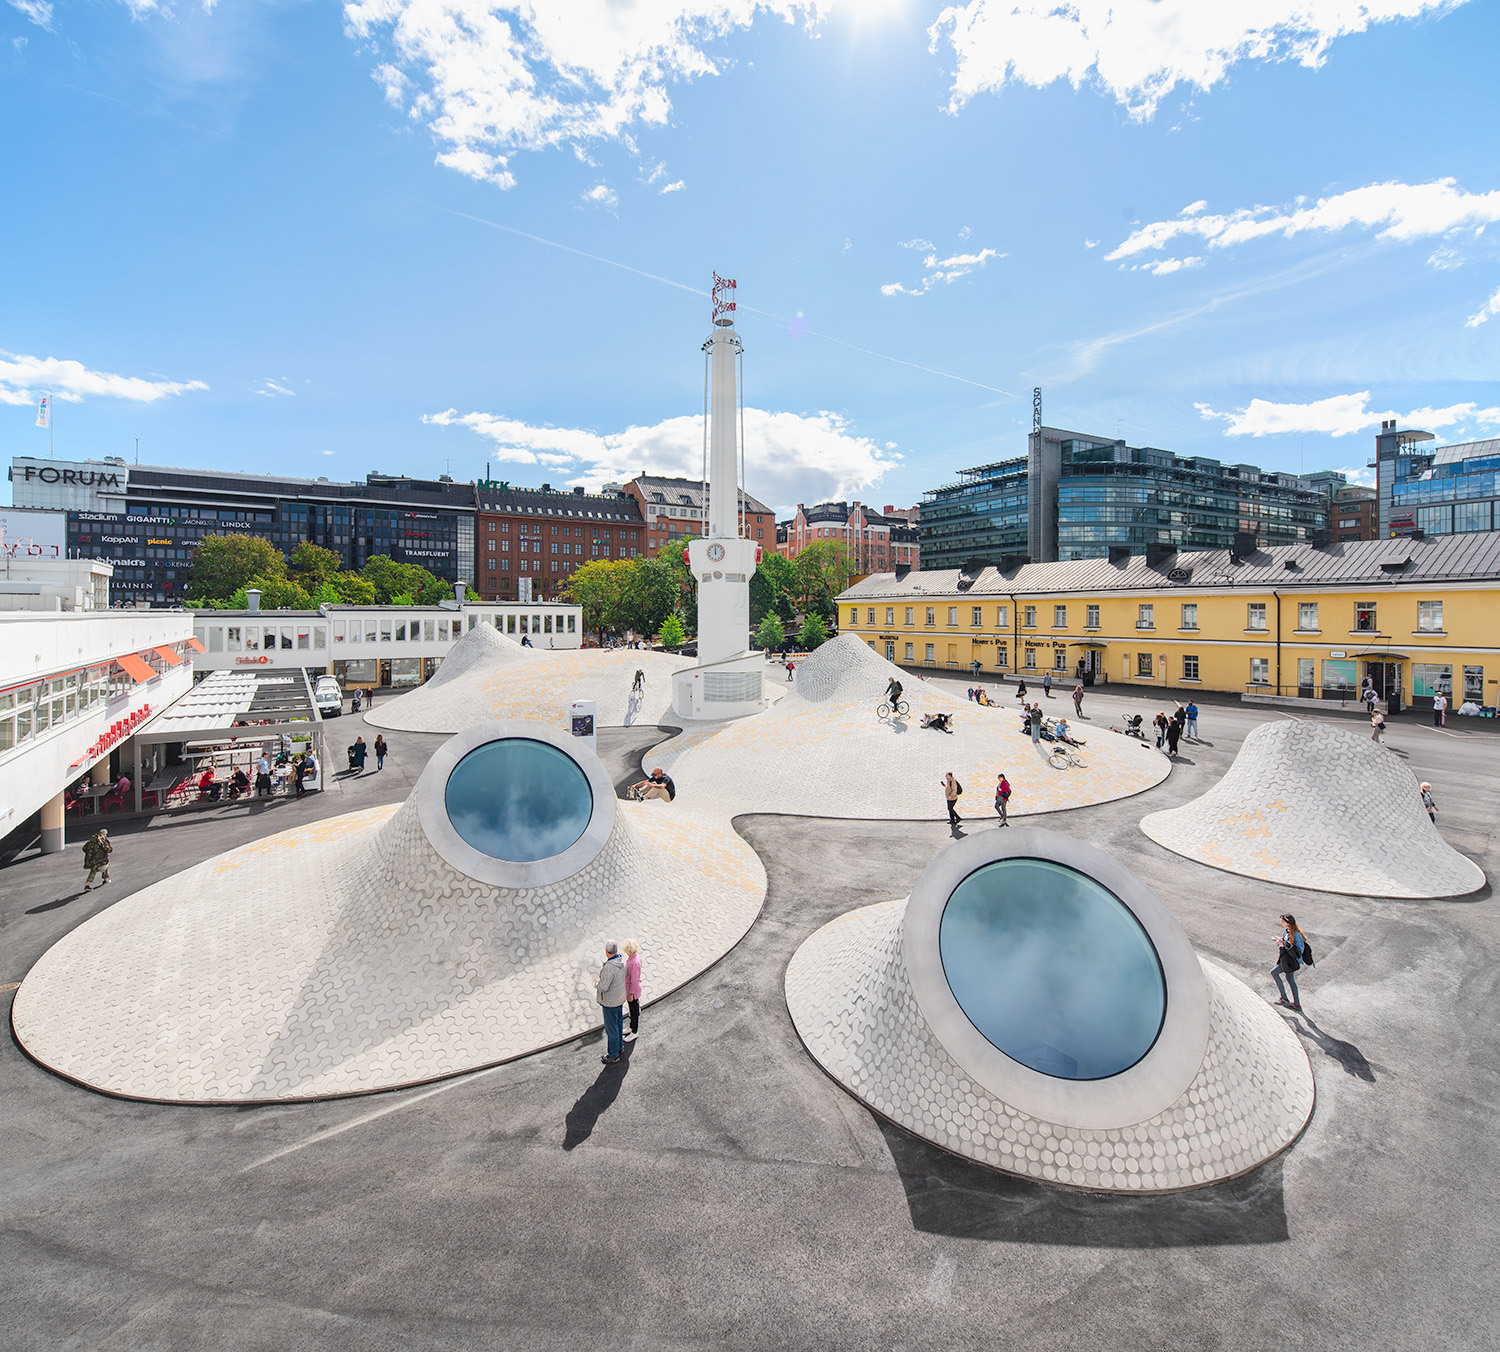 A subterranean annex museum under the Lasipalatsi plaza in Helsinki, Finland.